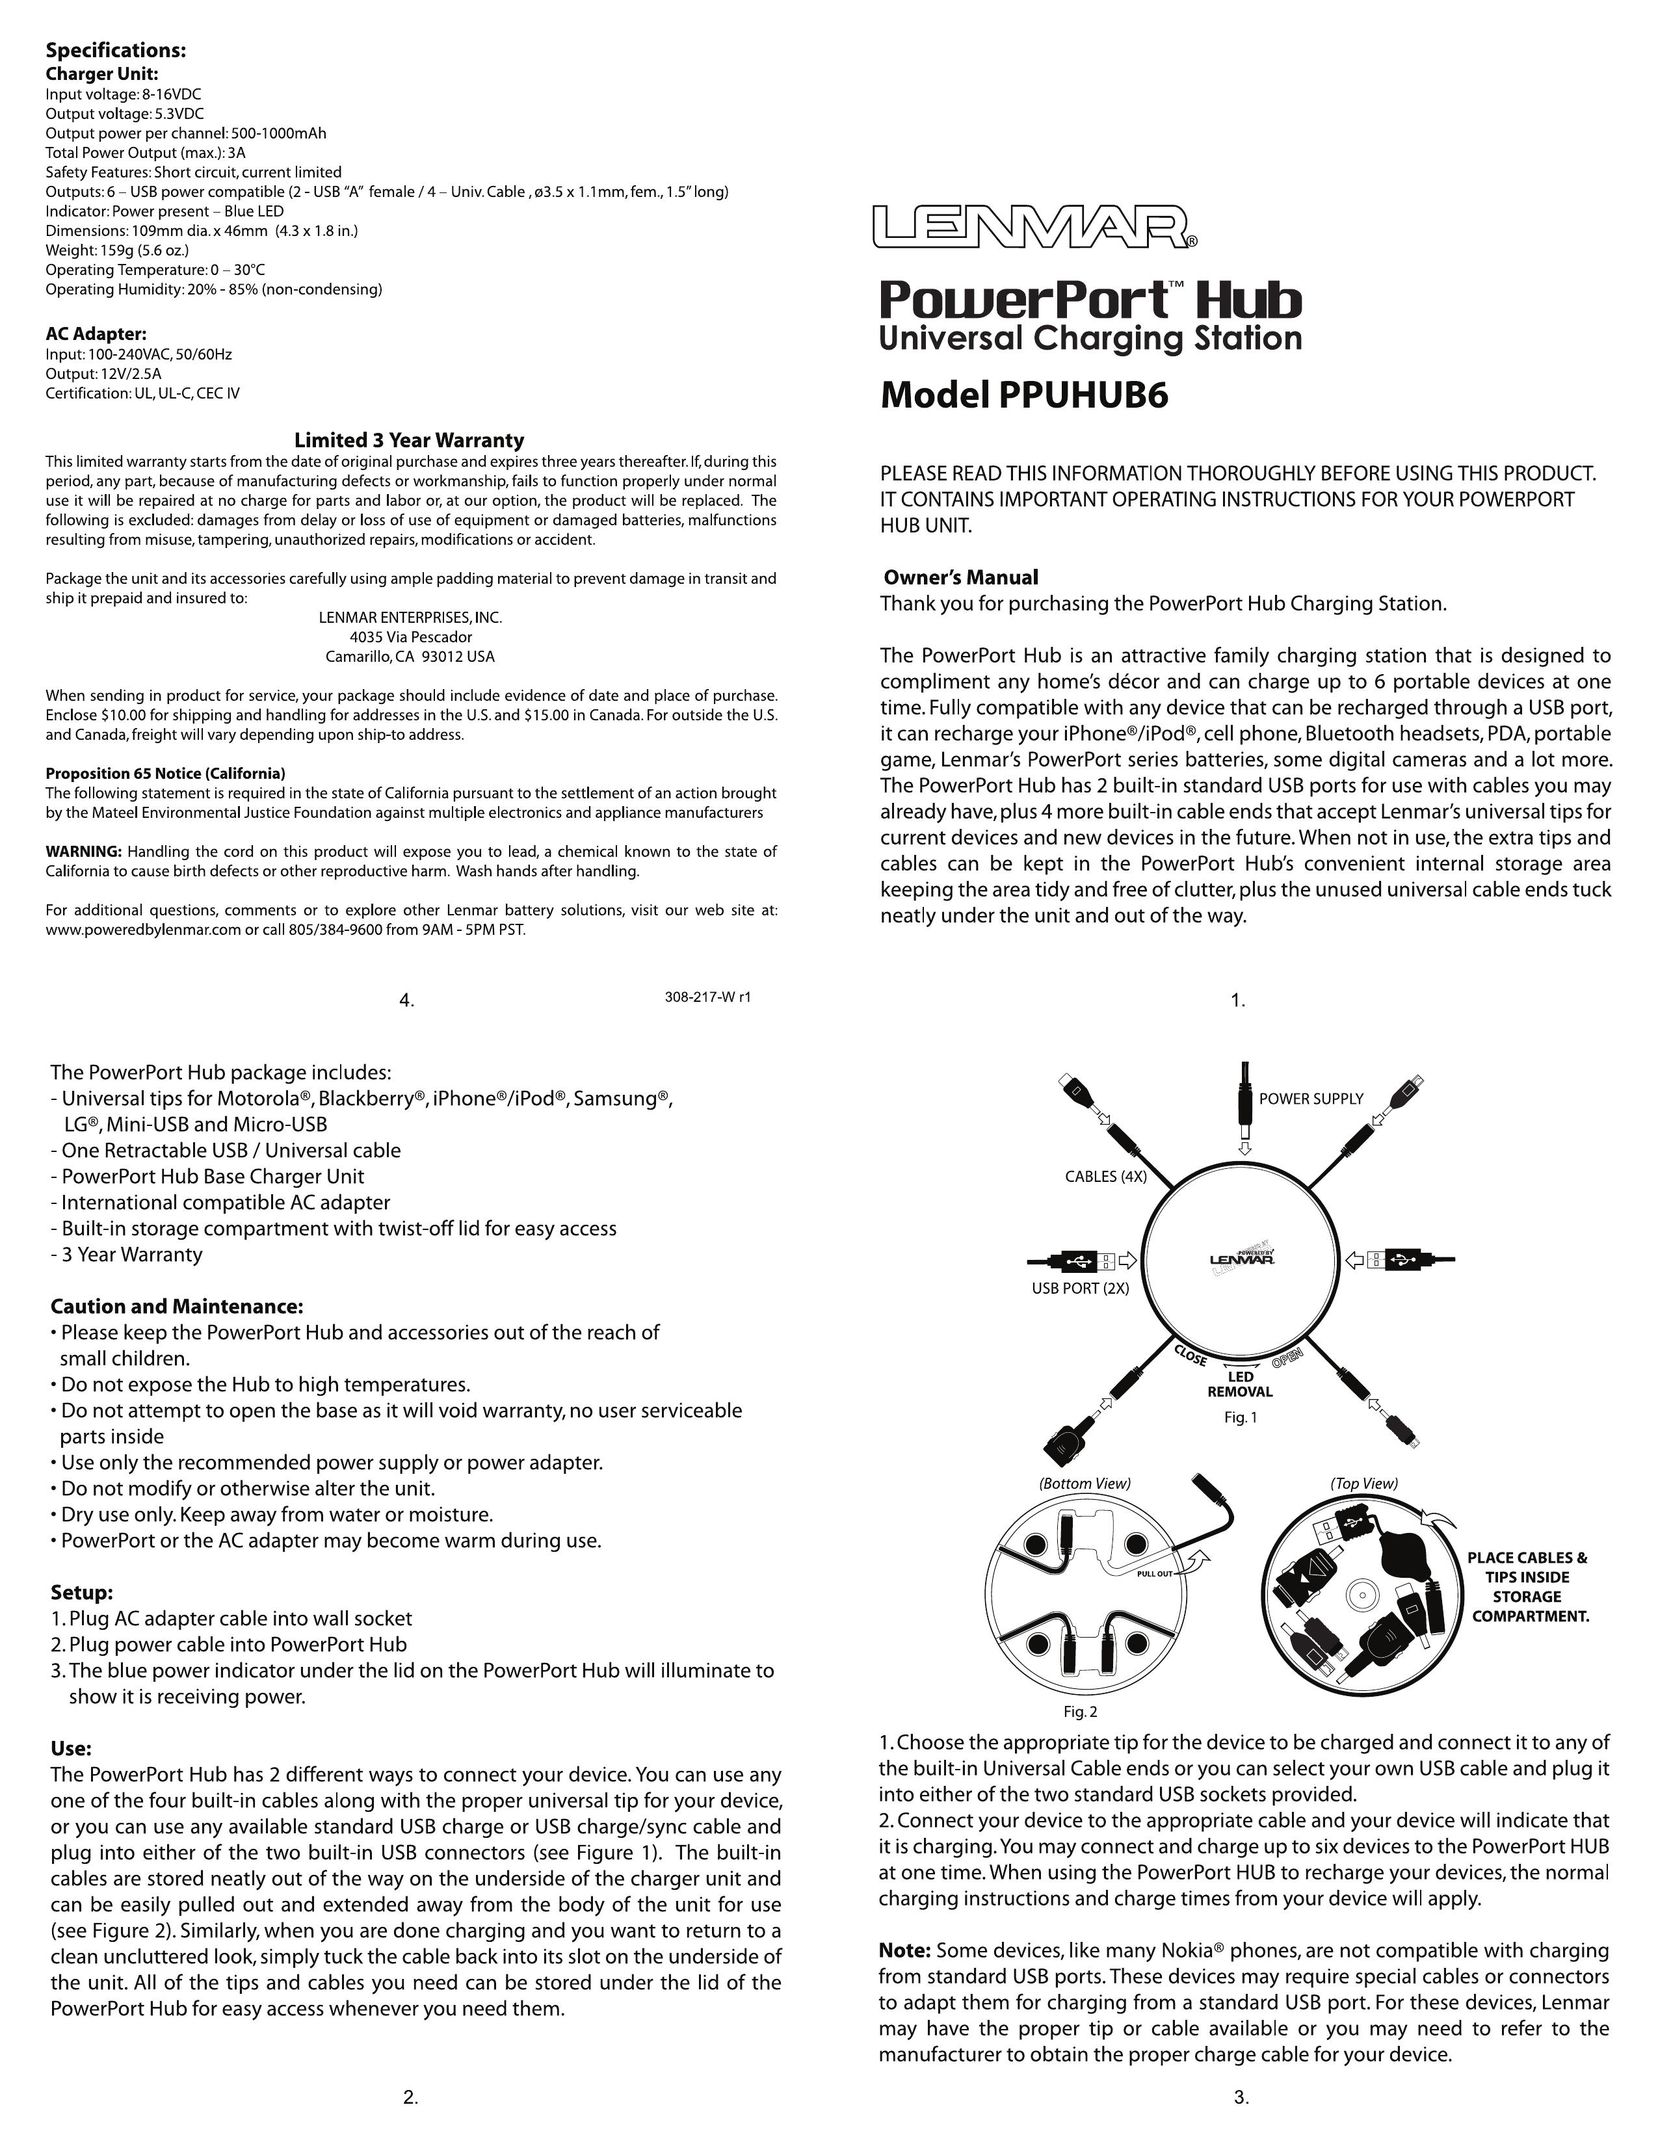 Lenmar Enterprises PPUHUB6 Switch User Manual